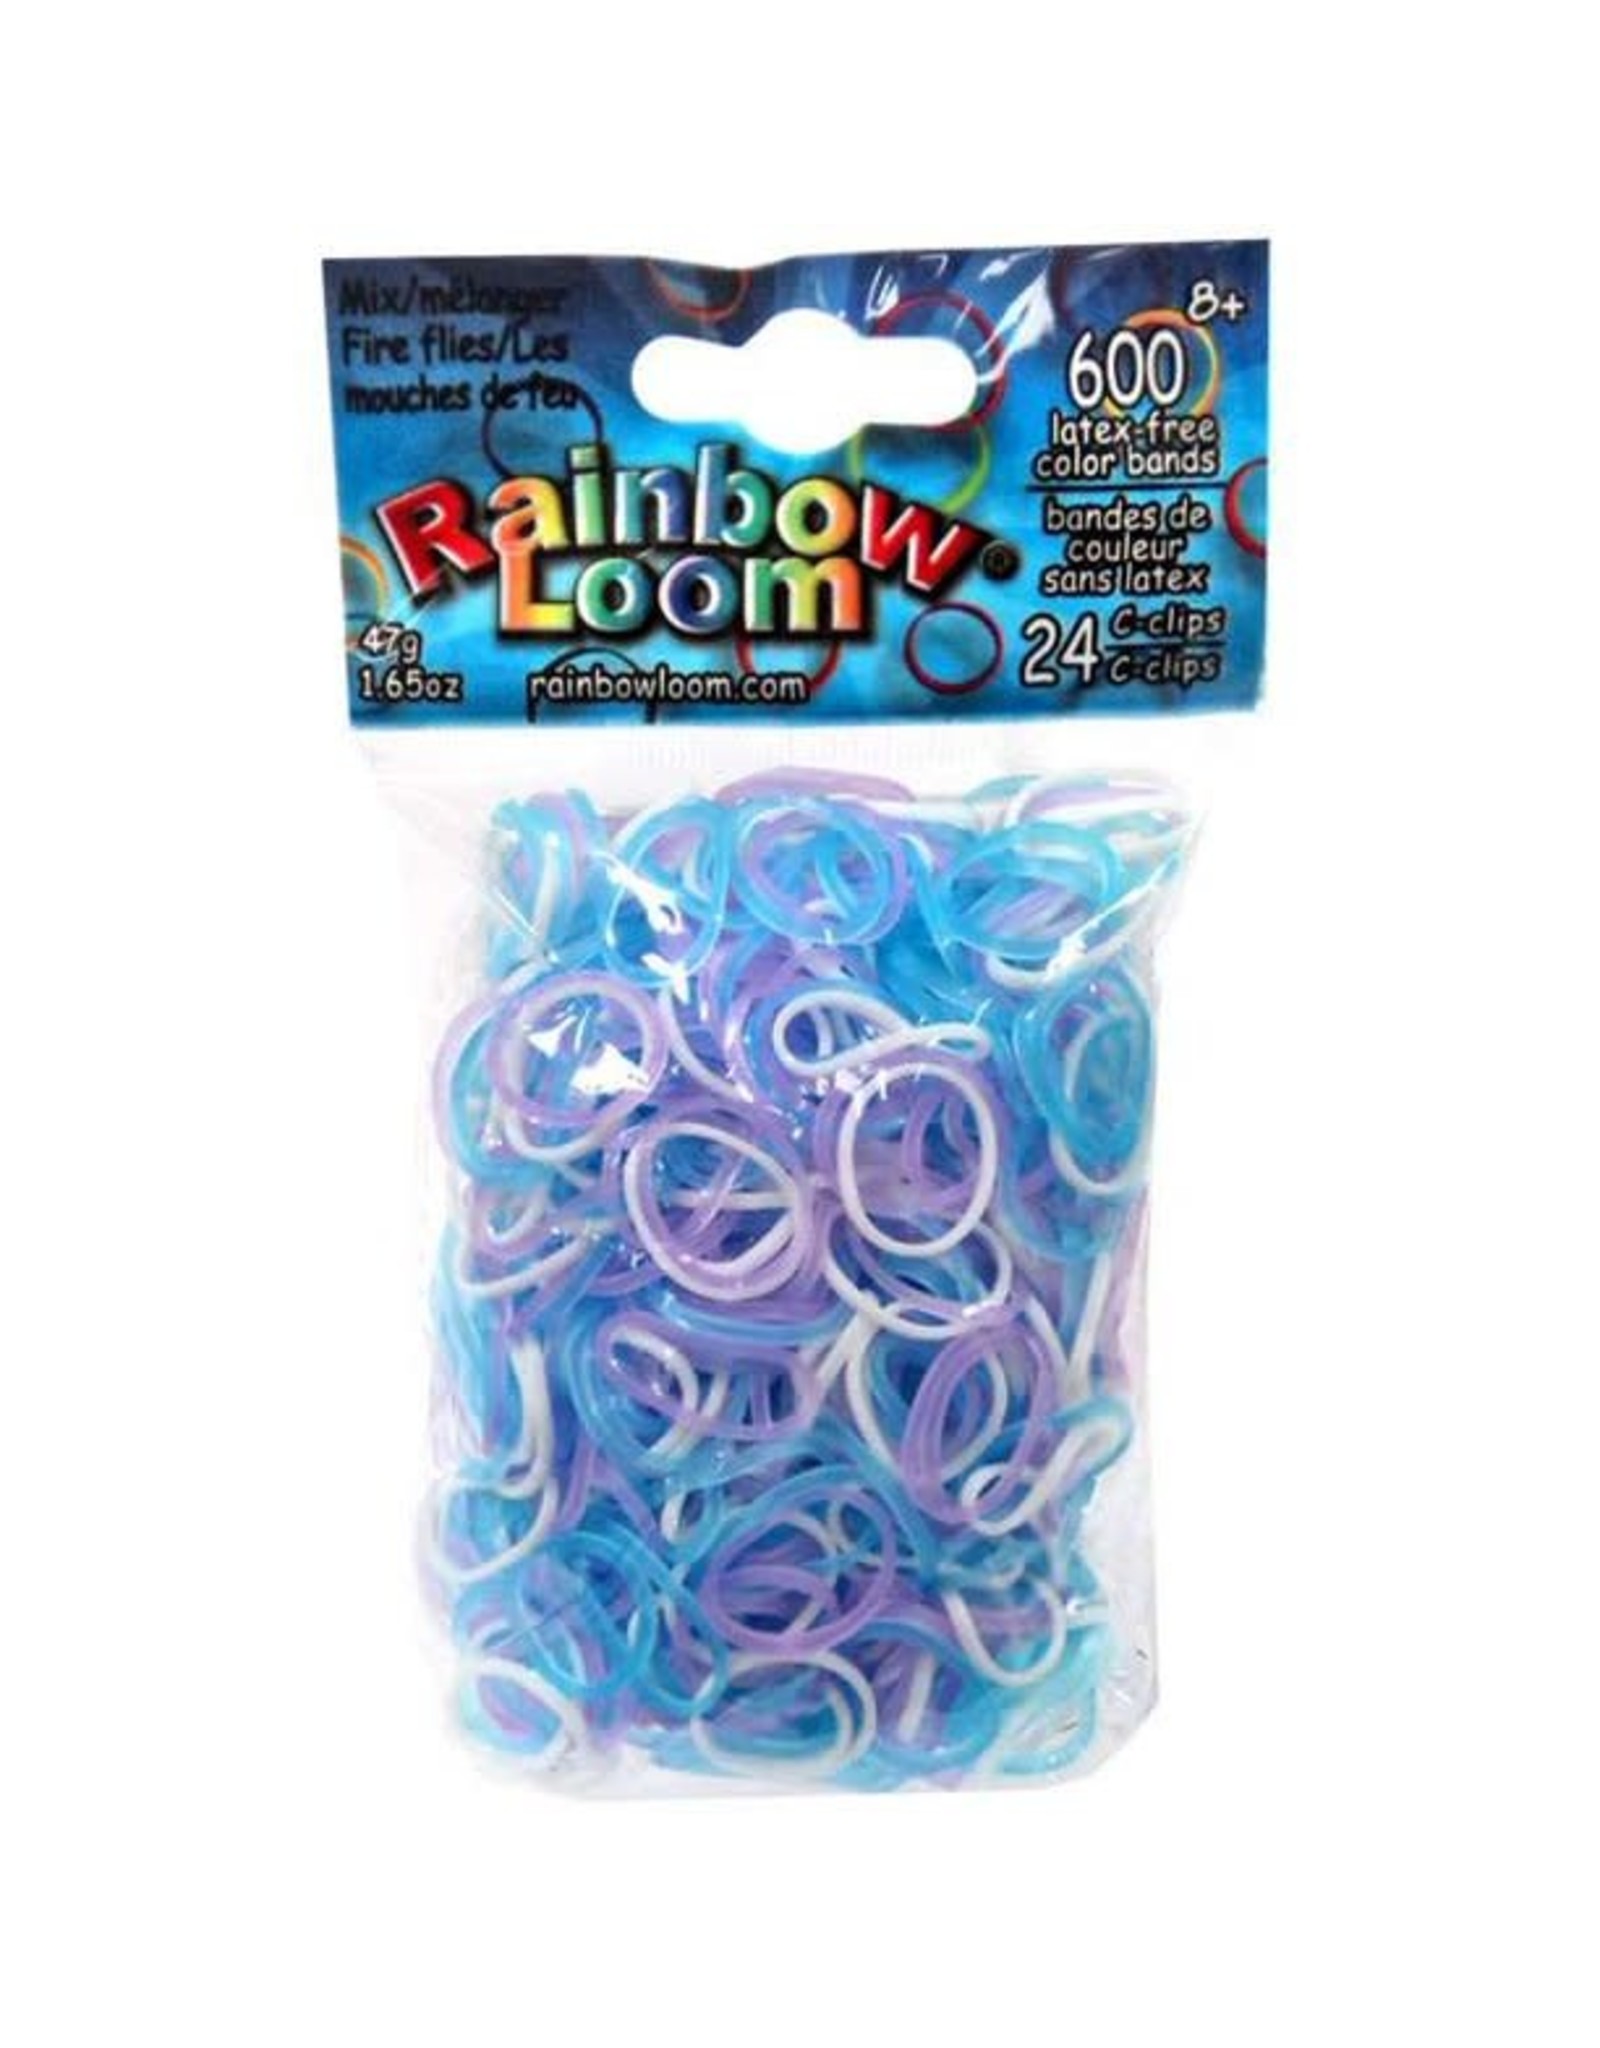 Rainbow Loom Kit - Wit & Whimsy Toys